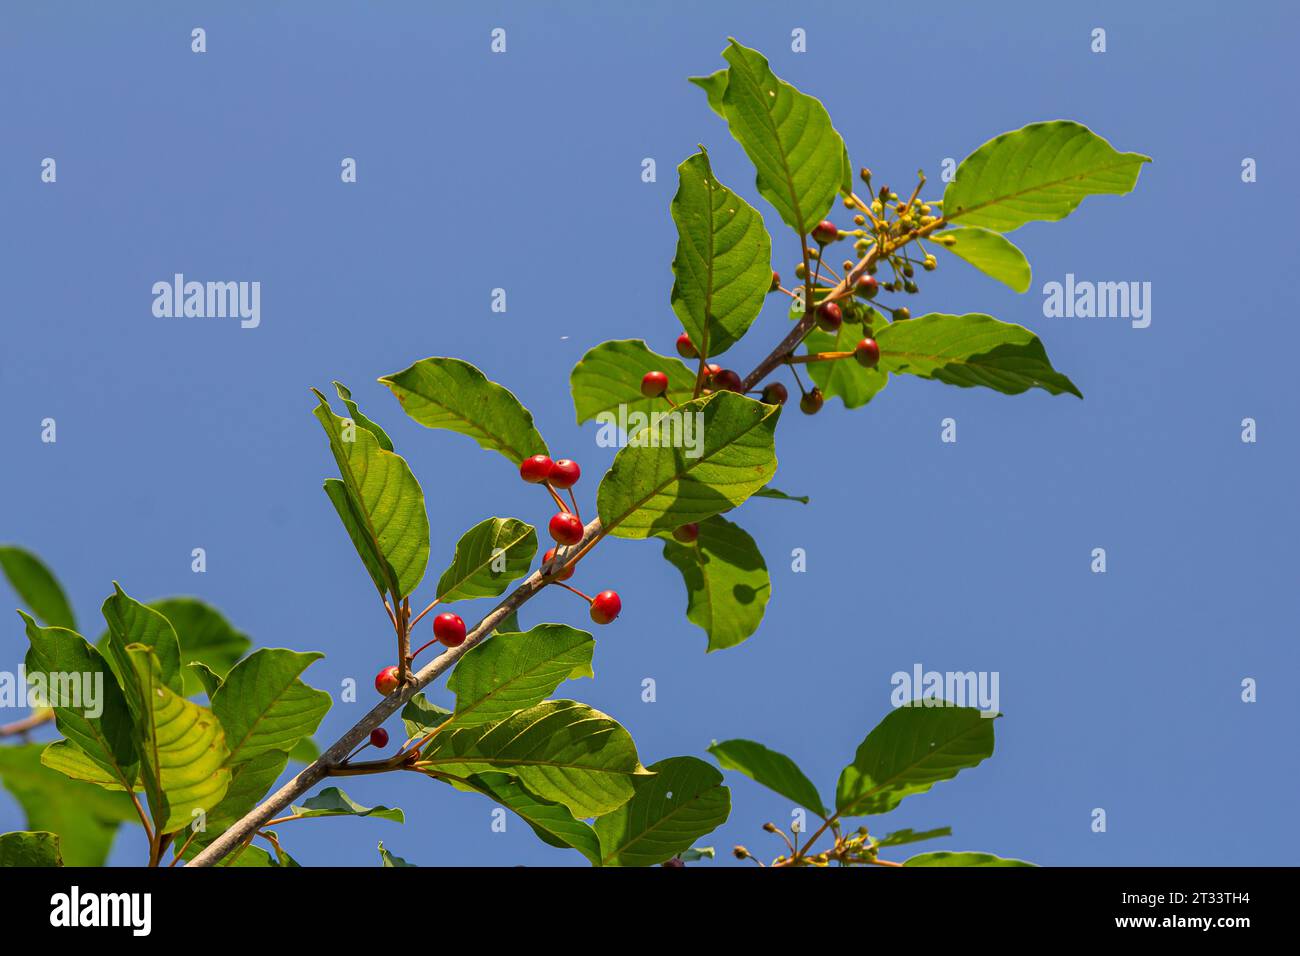 Branches of Frangula alnus with black and red berries. Fruits of Frangula alnus. Stock Photo